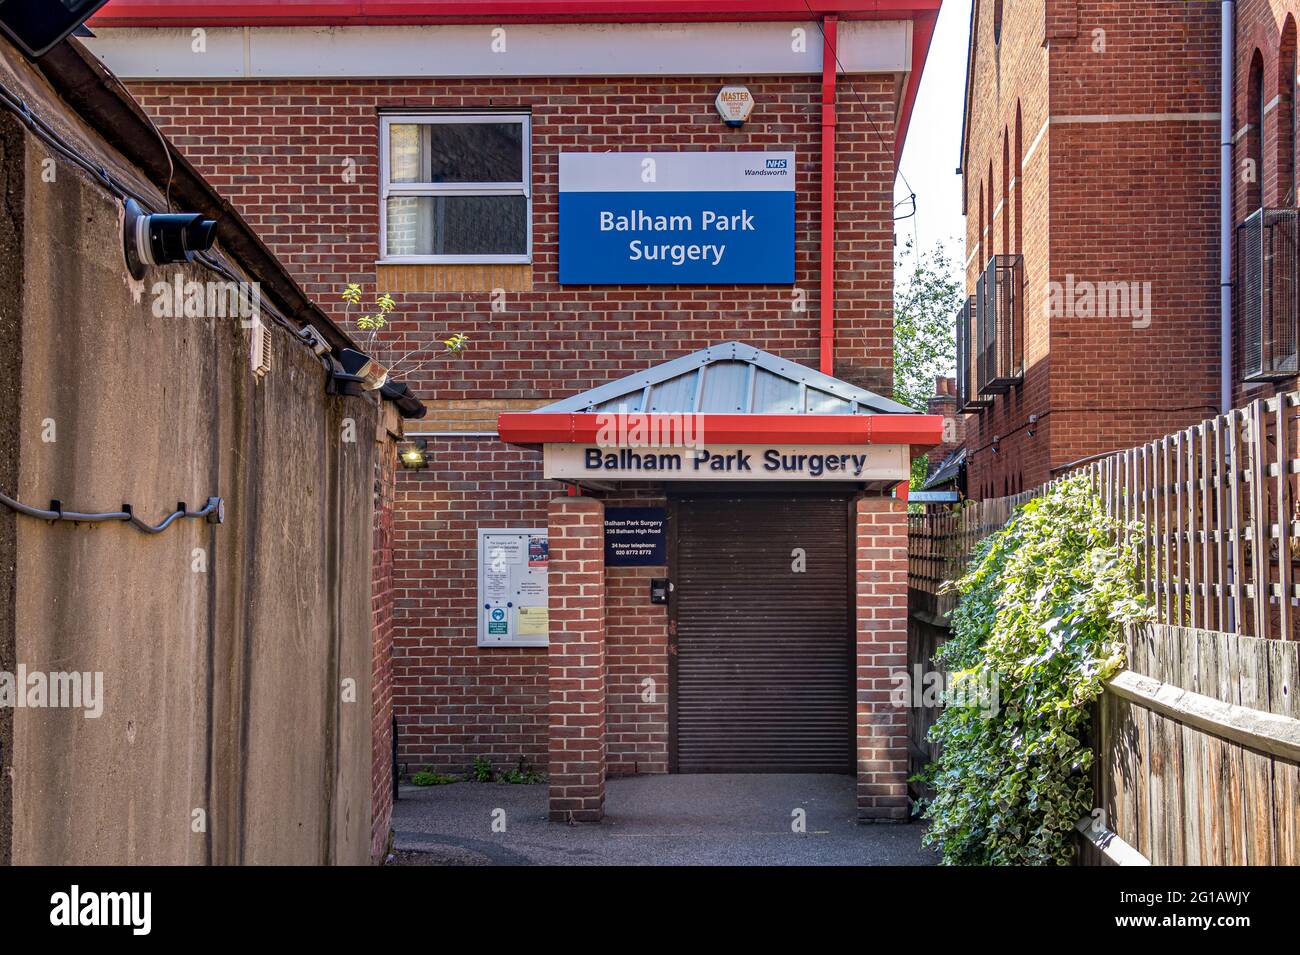 L'entrata al Balham Park Surgery an NHS Medici chirurgia e pratica medica si trova a 236 Balham High Road, Londra, SW17 Foto Stock